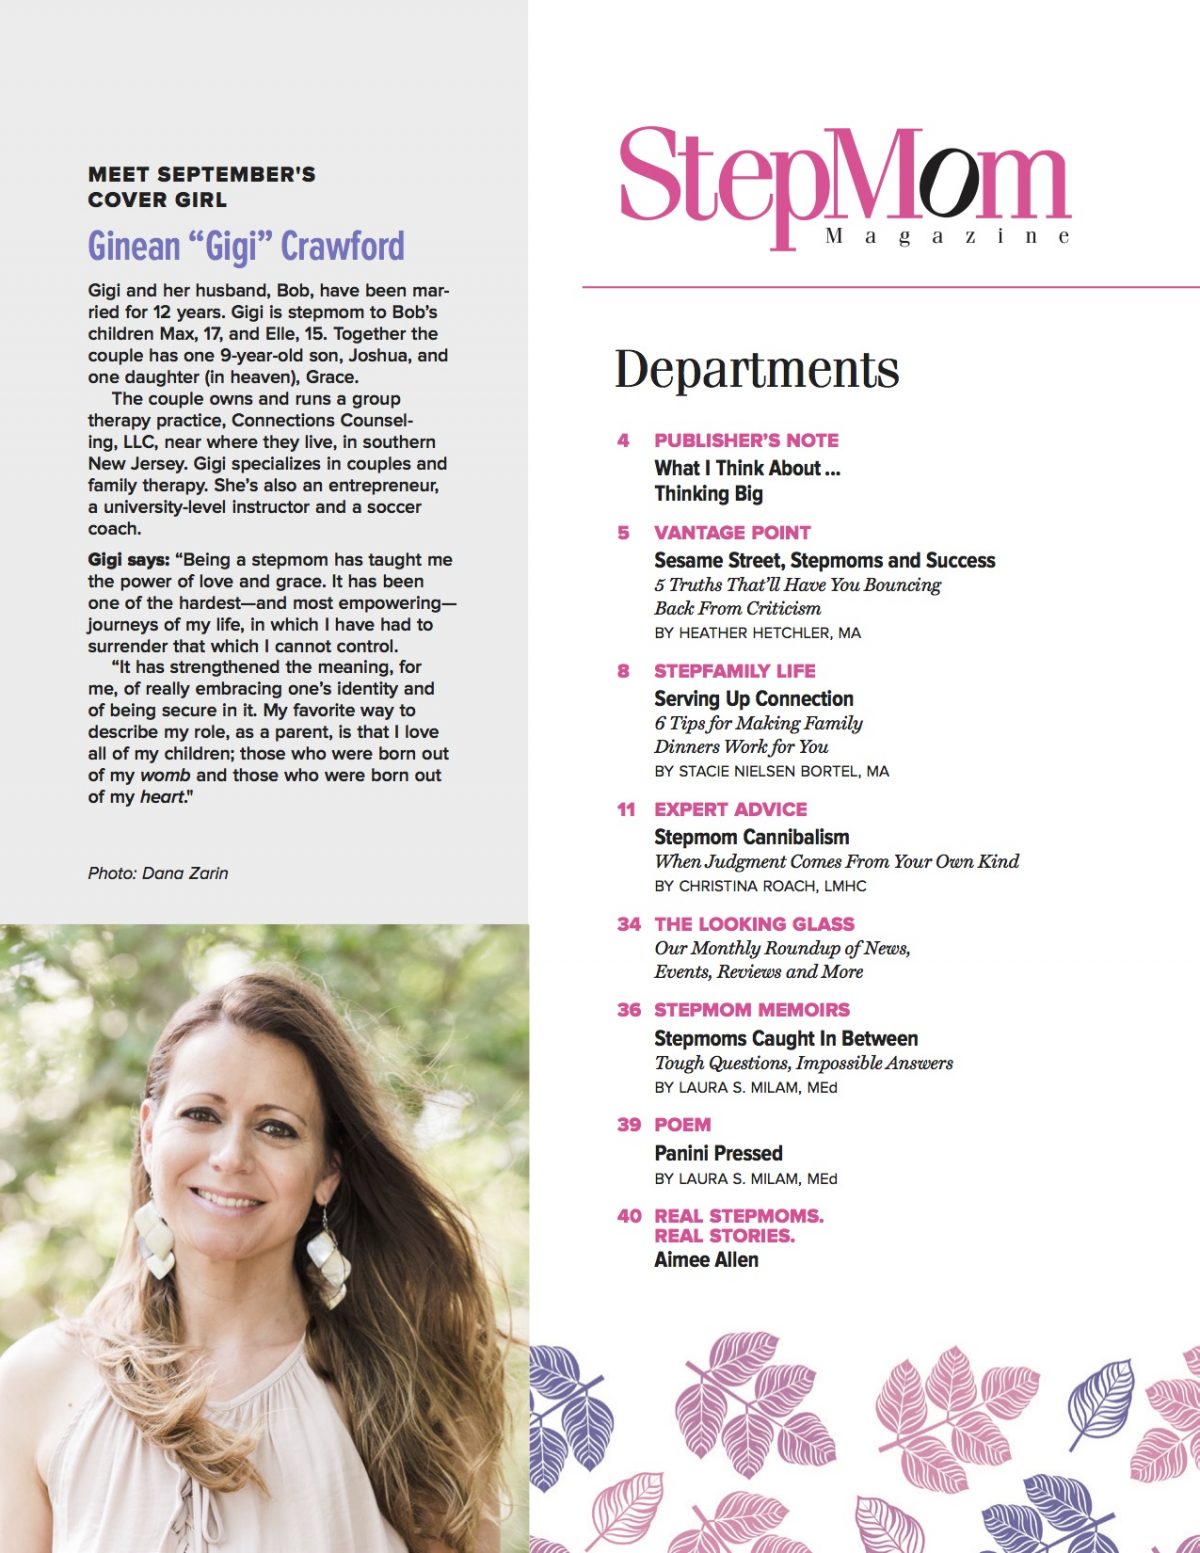 Stepmom Magazine Inside The September 2017 Issue 8715